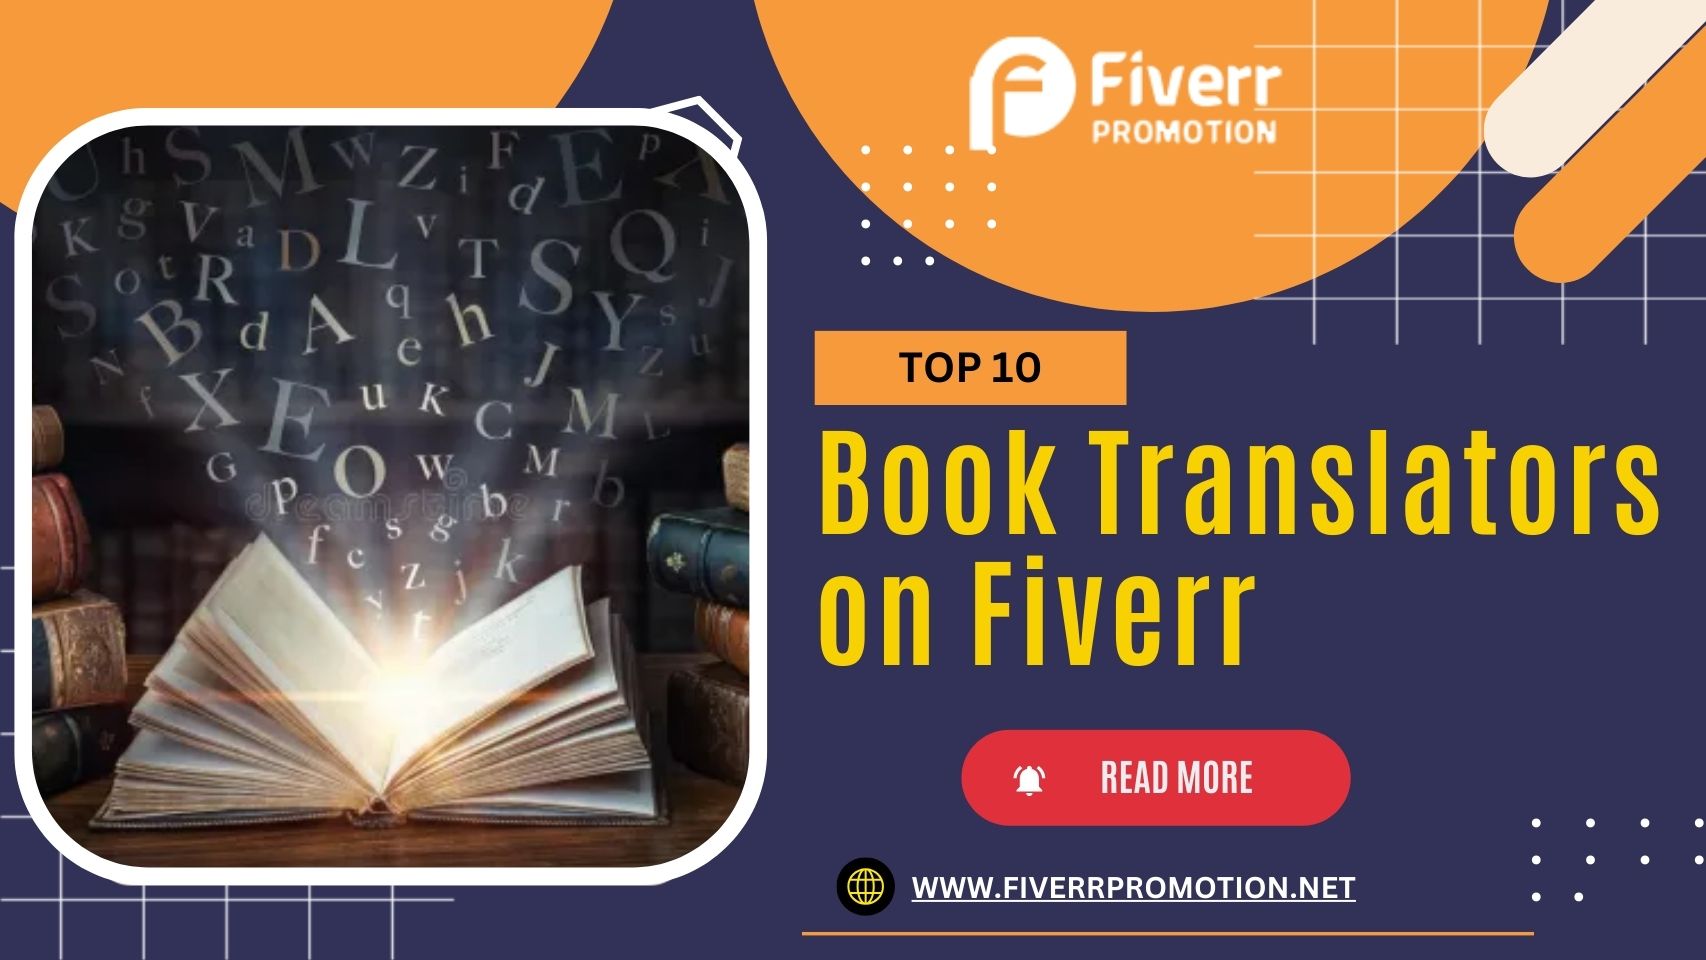 Top 10 Book Translators on Fiverr